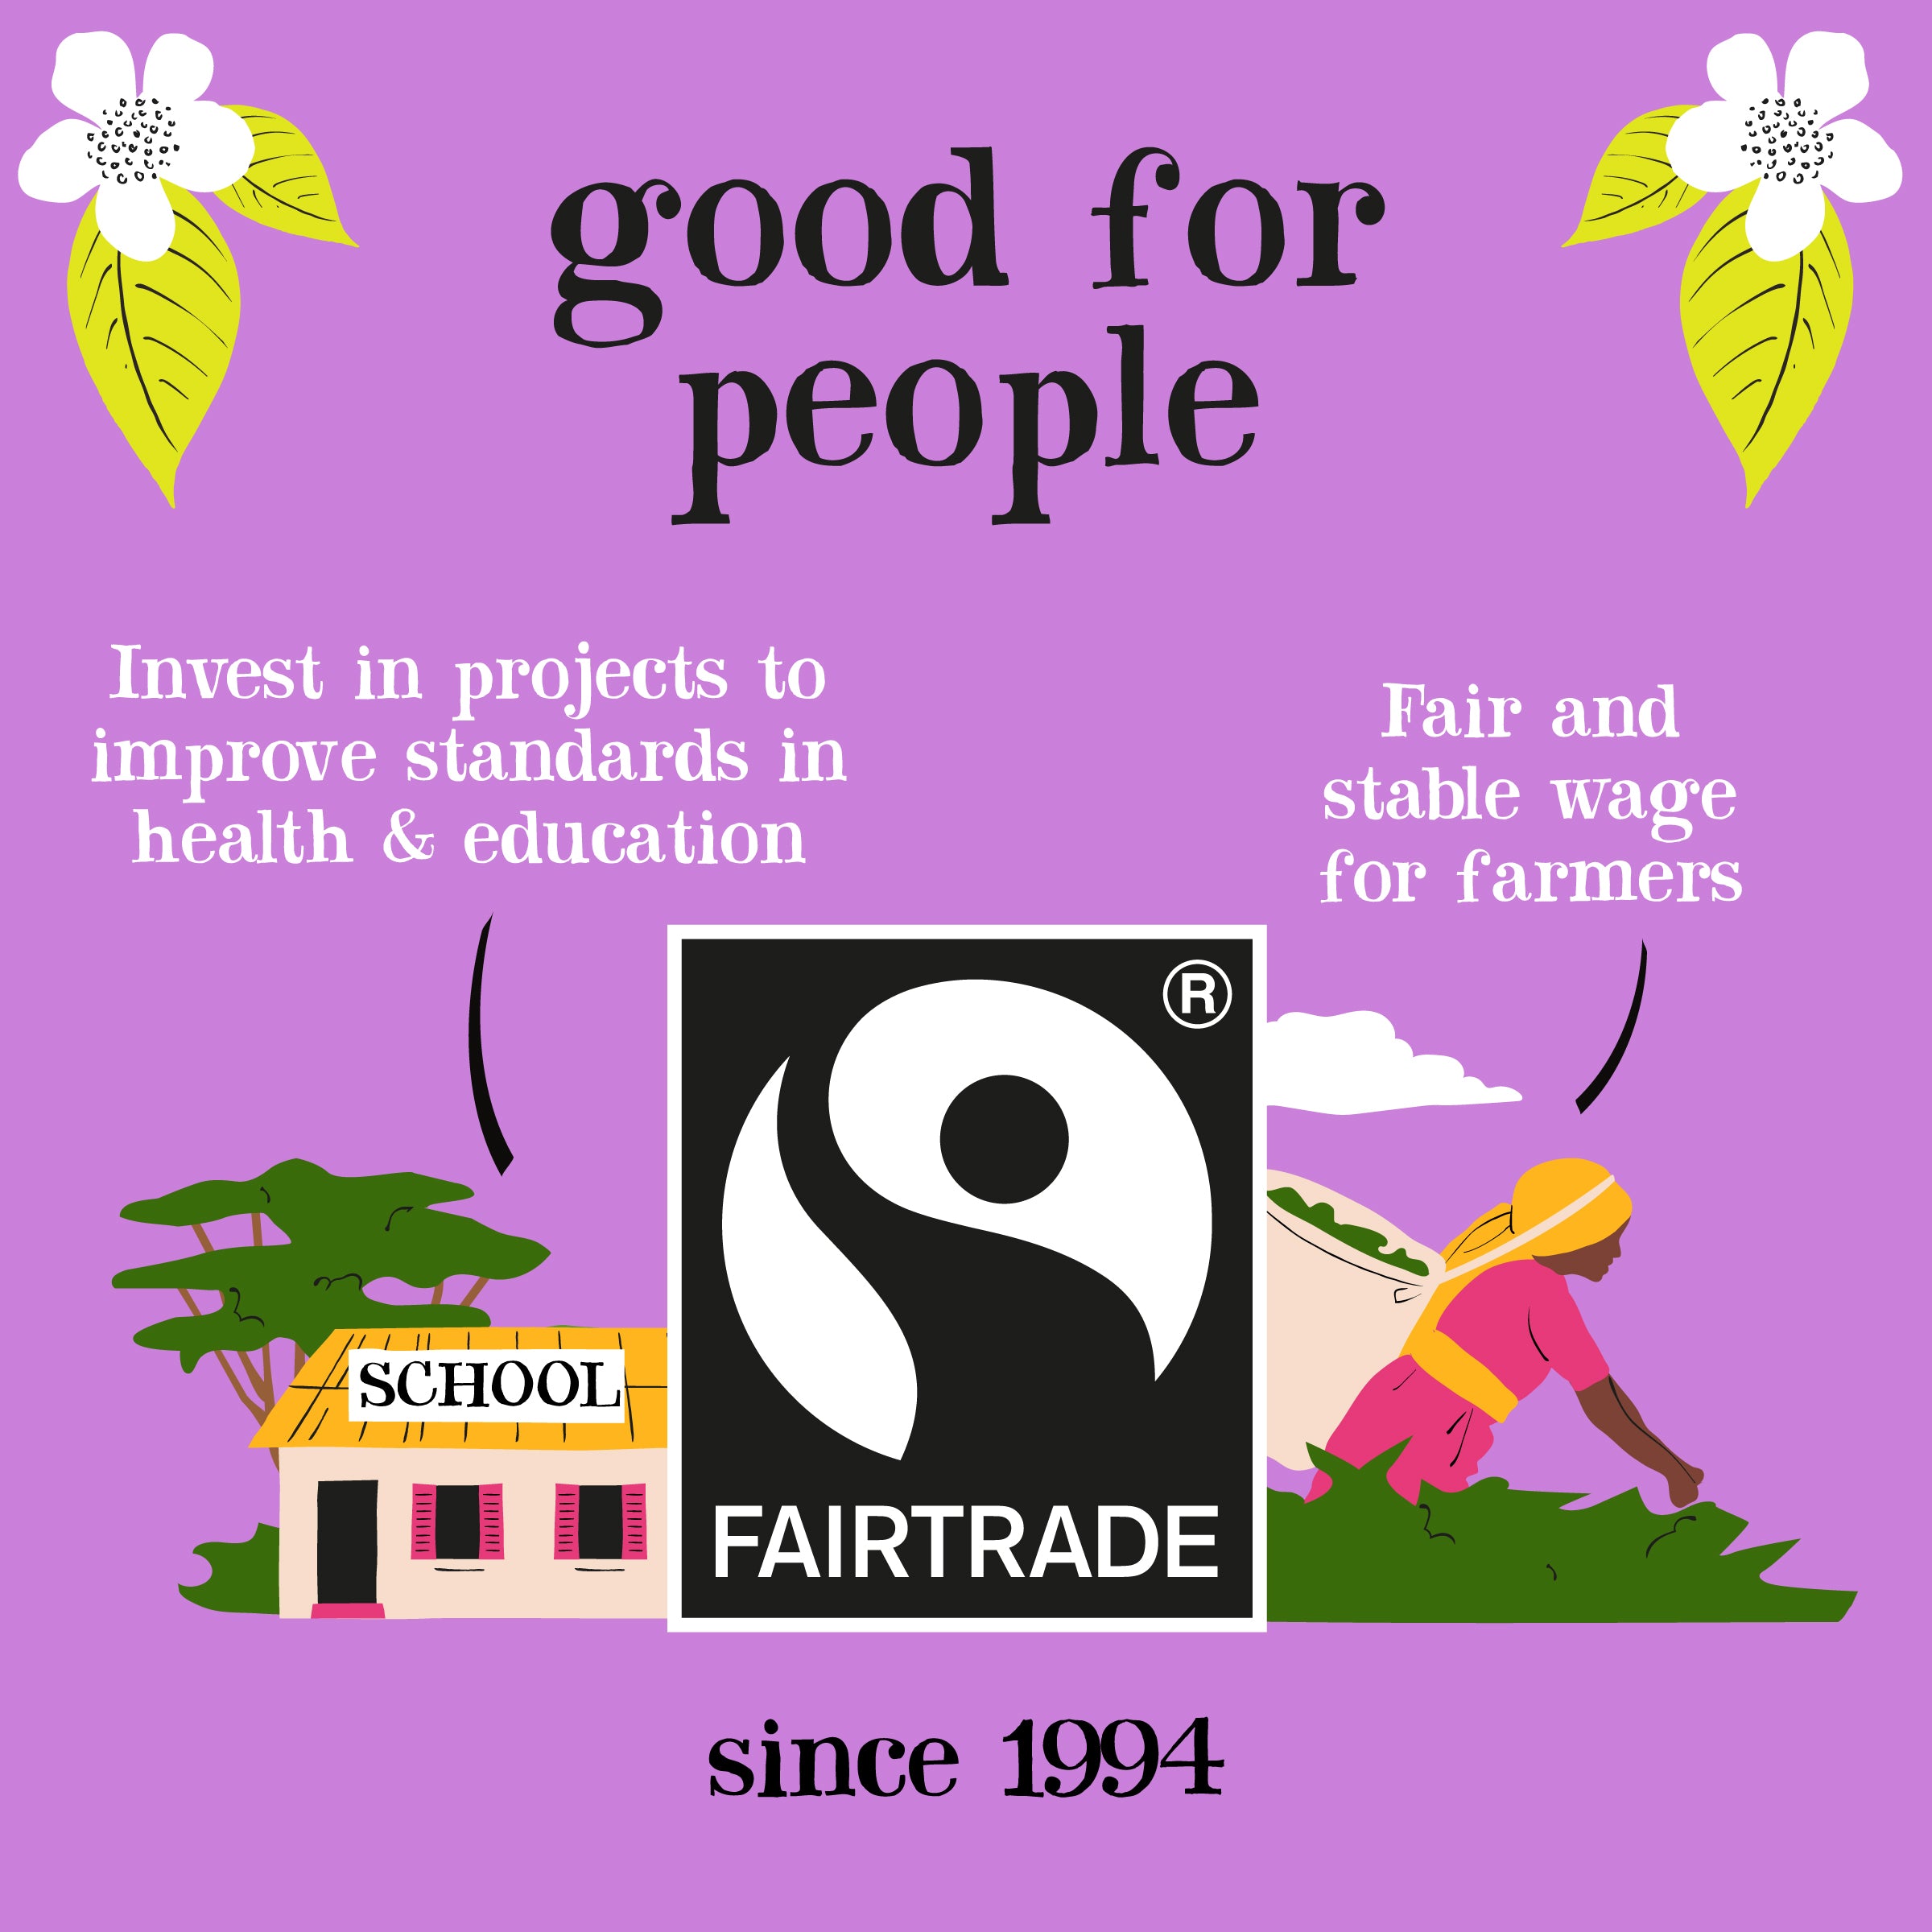 Organic & Fairtrade Everyday Decaf 40 Tea Bags